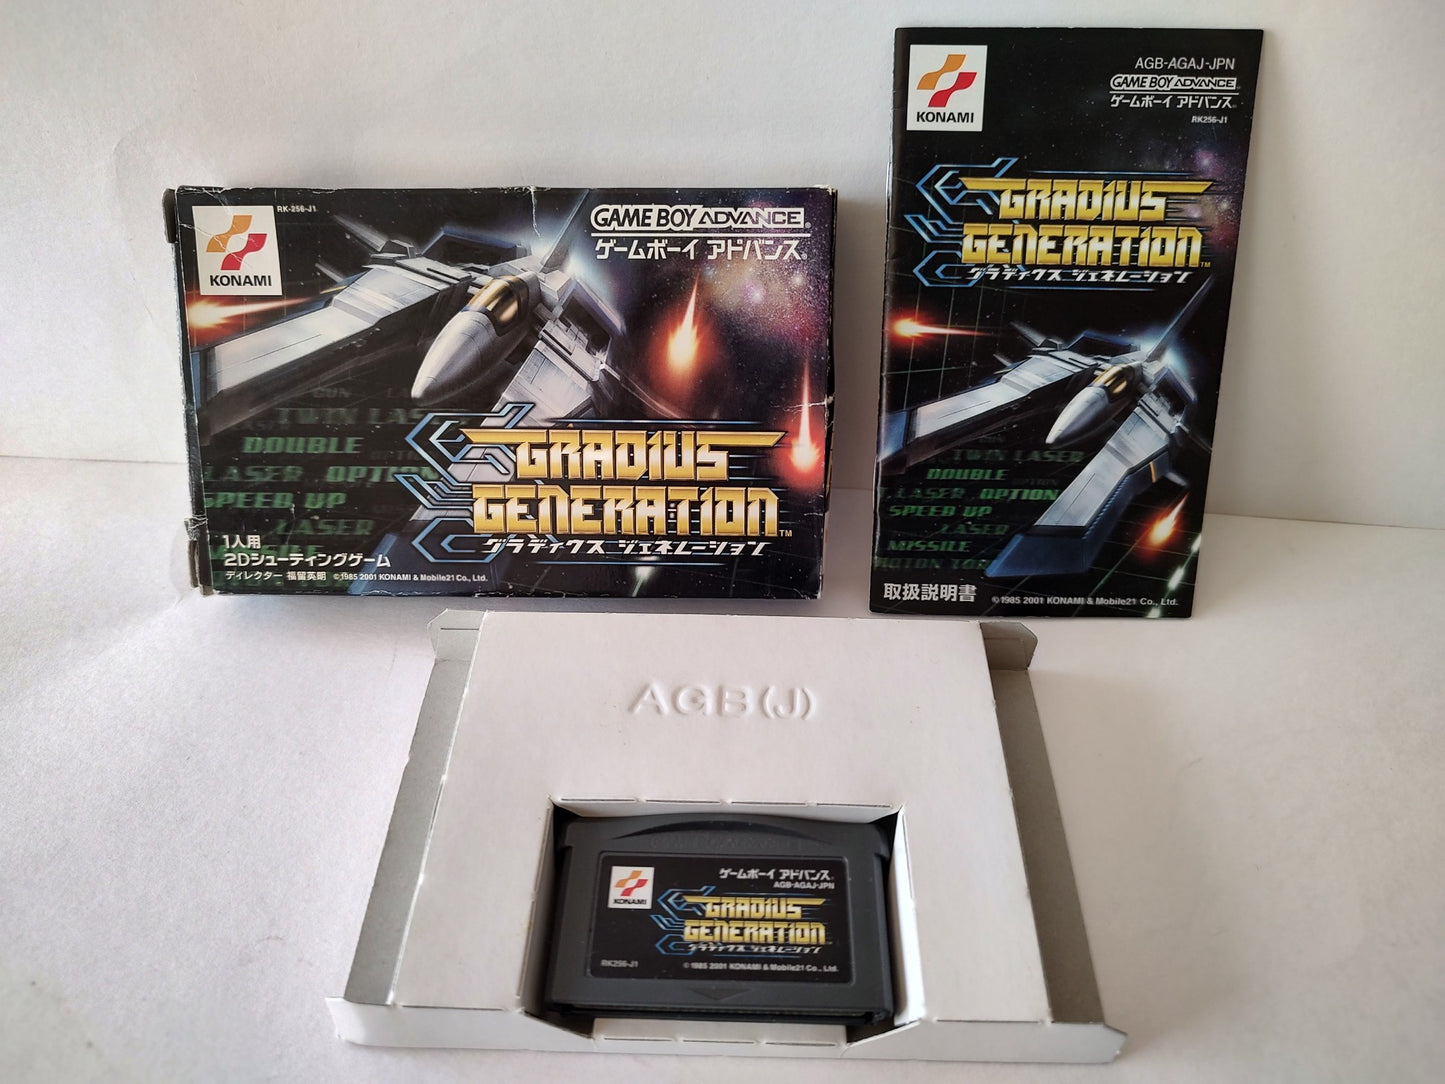 Gradius Generation Gameboy Advance Cartridge,Manual,Boxed set